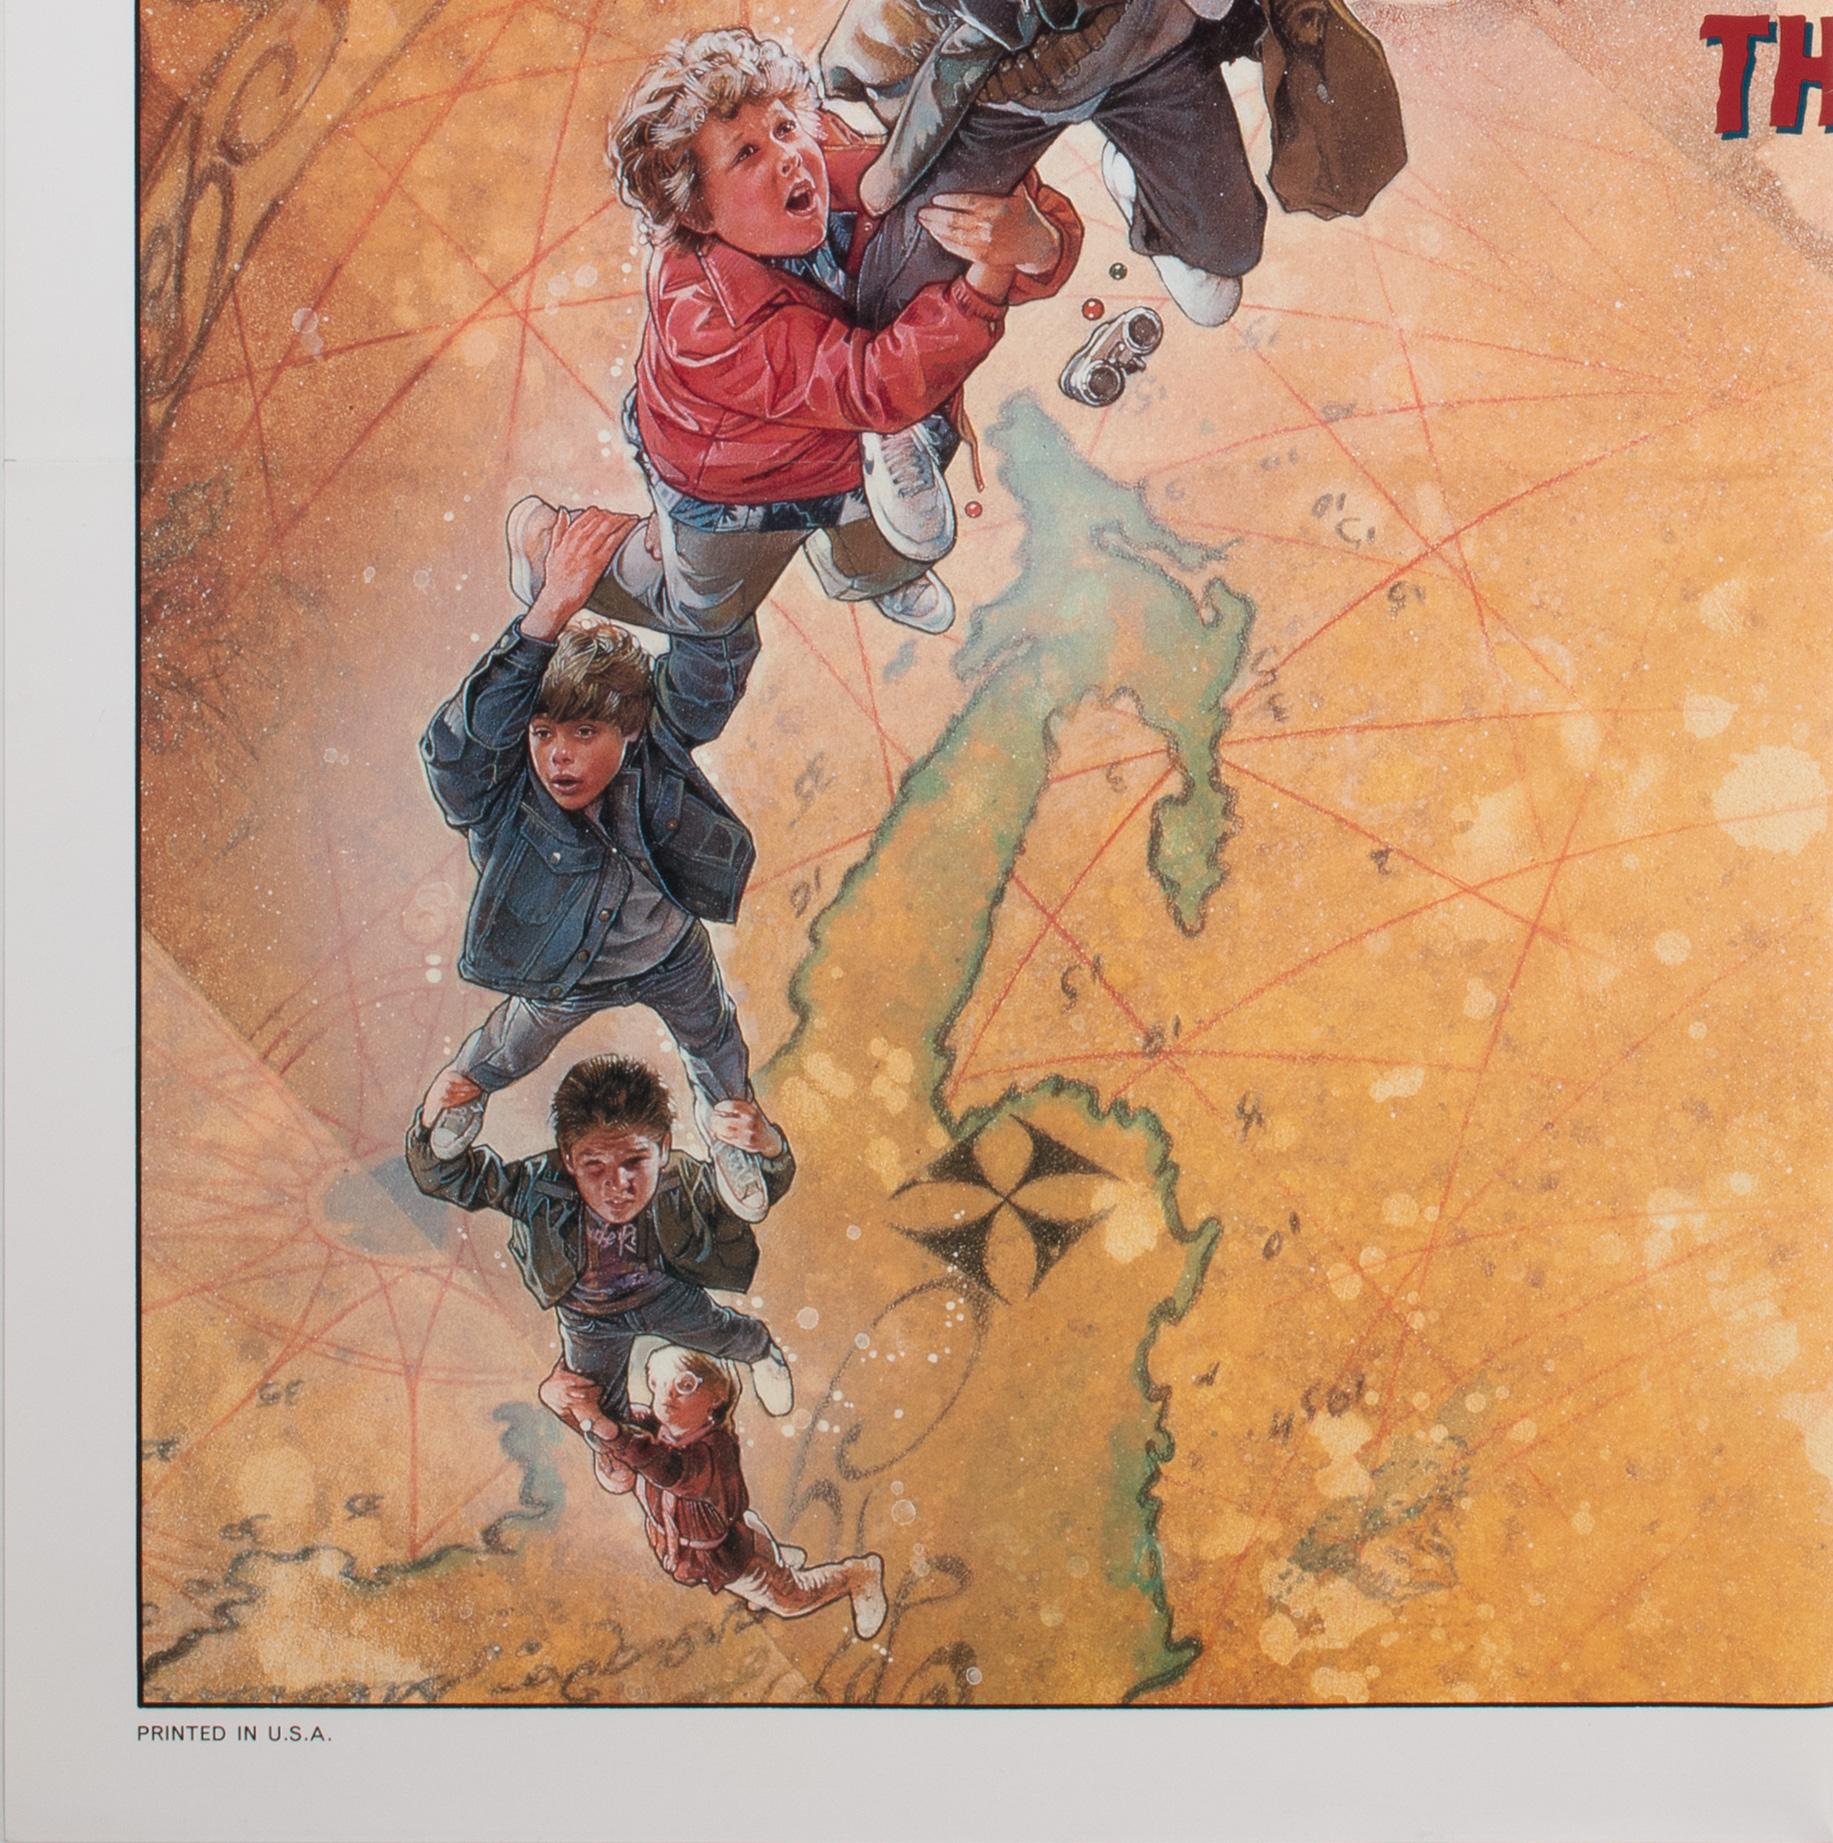 The Goonies 1985 US 1 Sheet Film Movie Poster, DREW STRUZAN For Sale 1